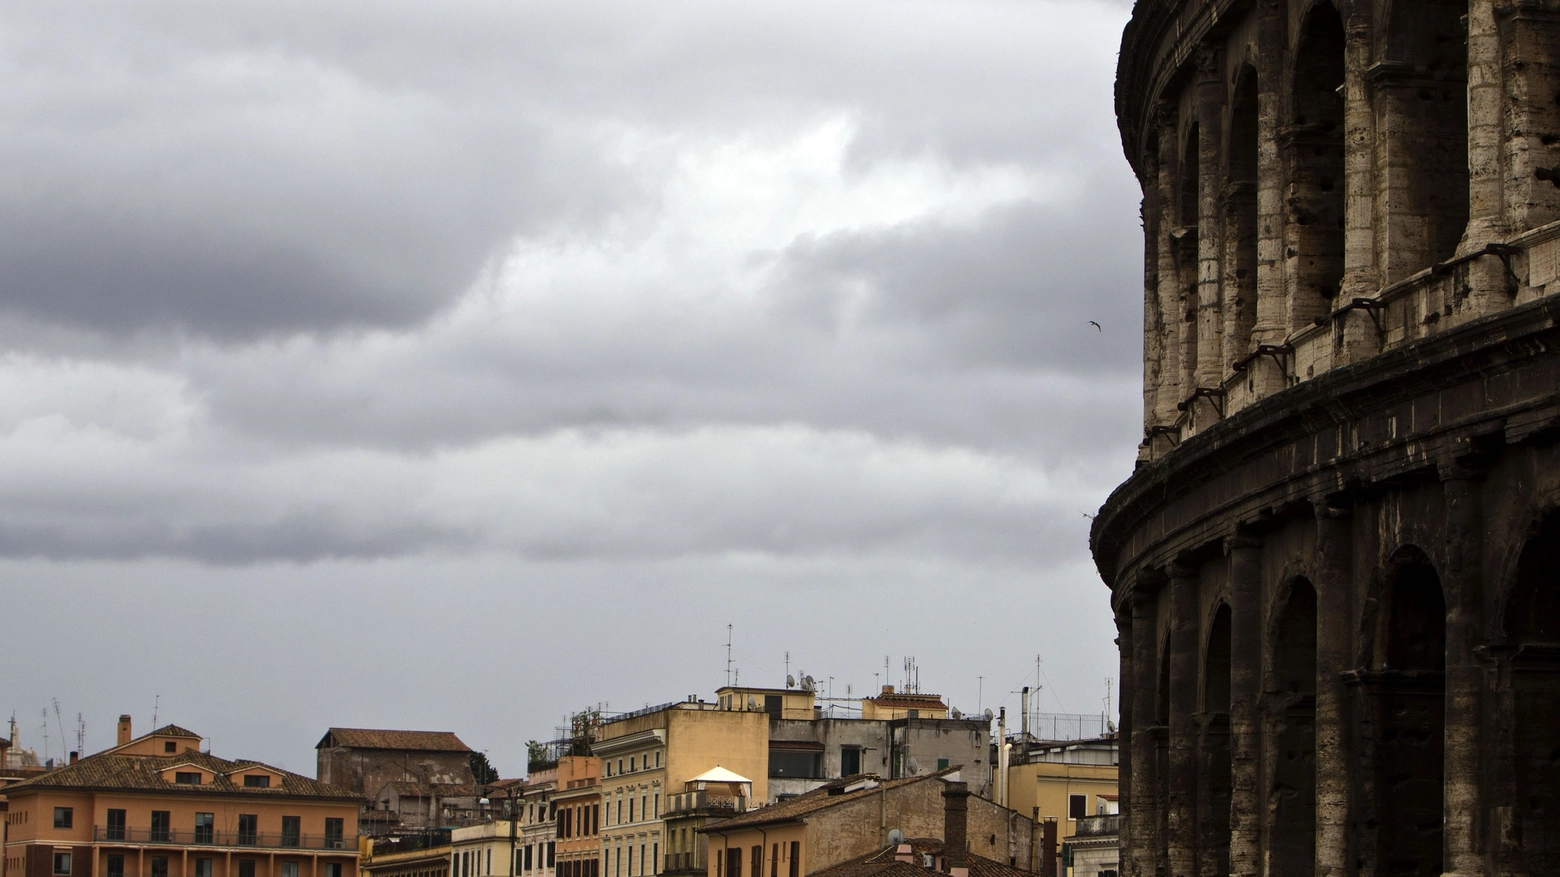 Giornata nuvolosa a Roma